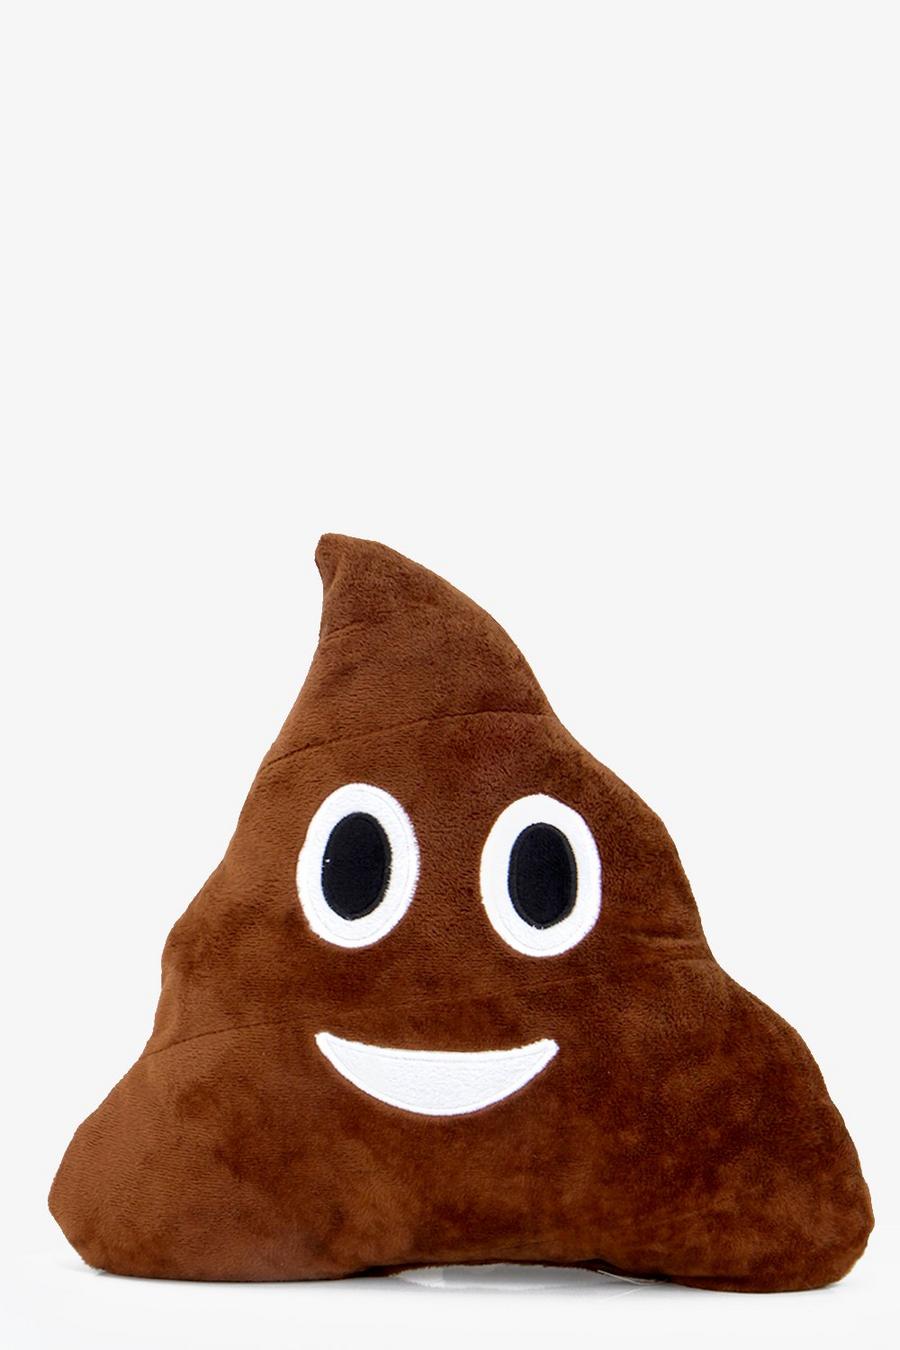 Brown Poo Smiley Face Emoji Cushion